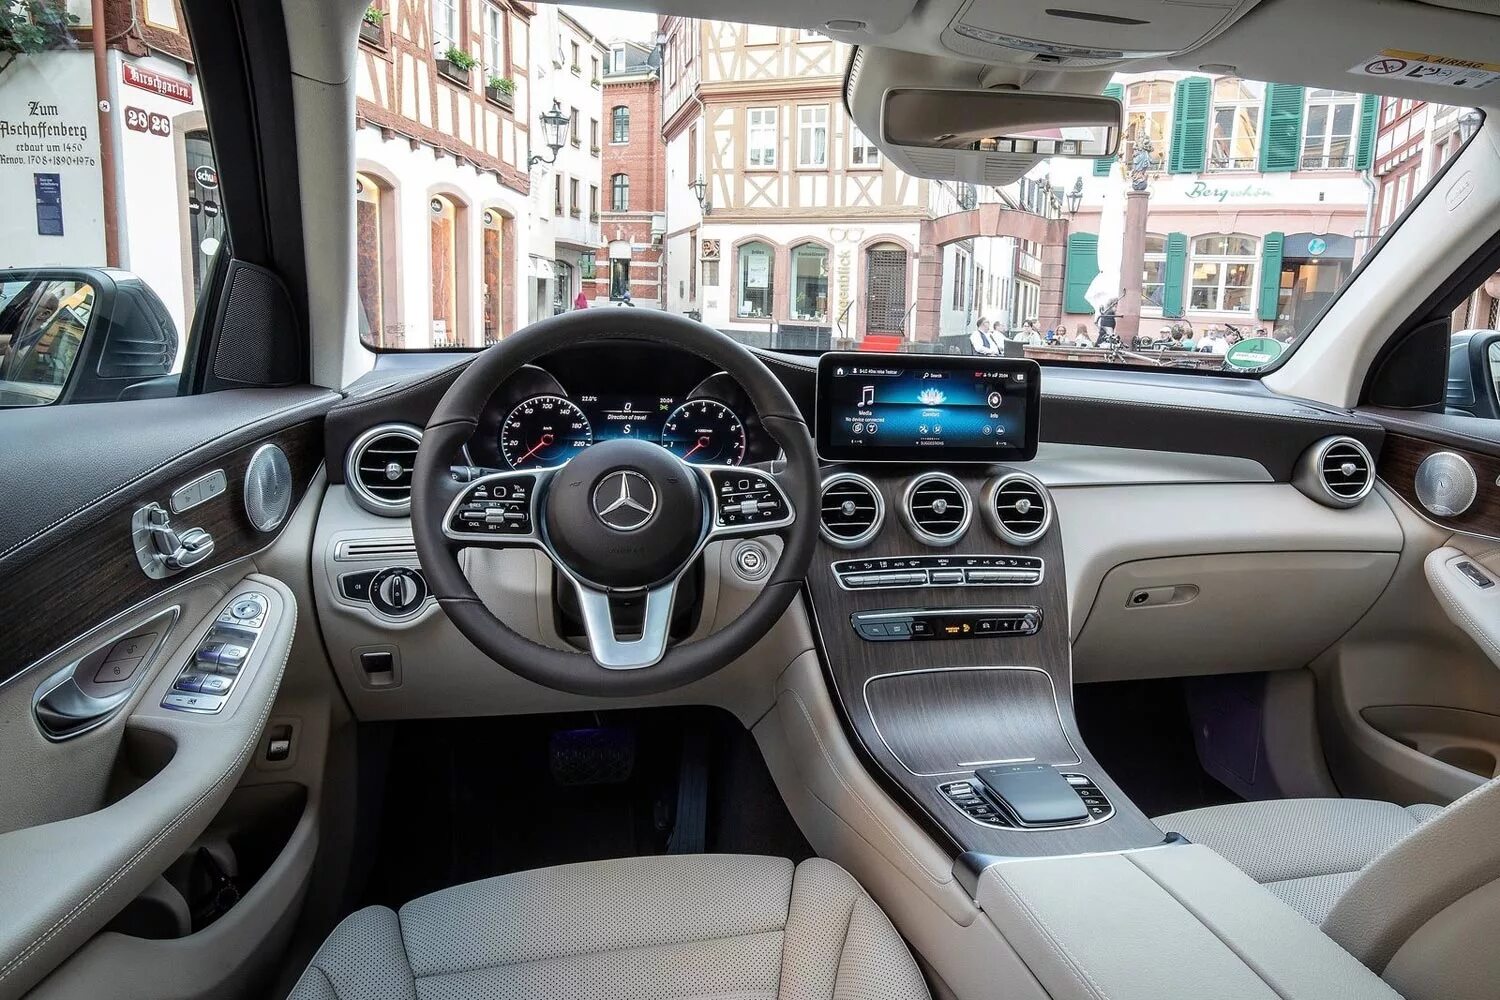 Мерседес салон внутри. Mercedes Benz GLC 2020 салон. GLC 200 Мерседес салон. Мерседес ГЛС 300 купе. Мерседес GLC 2021 интерьер.